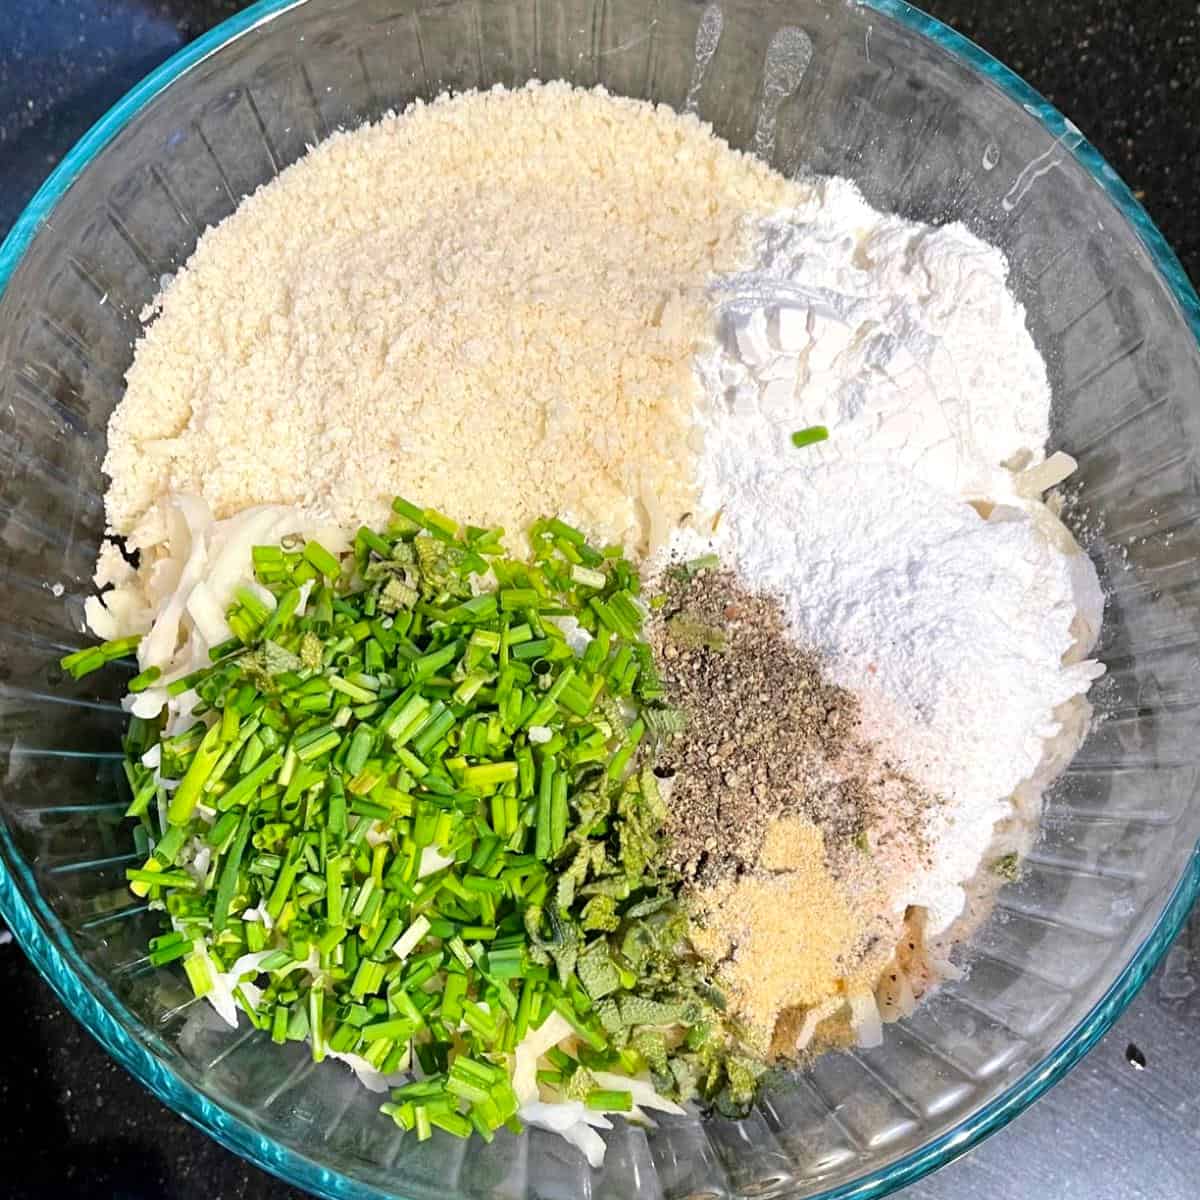 Ingredients for latkes in bowl.